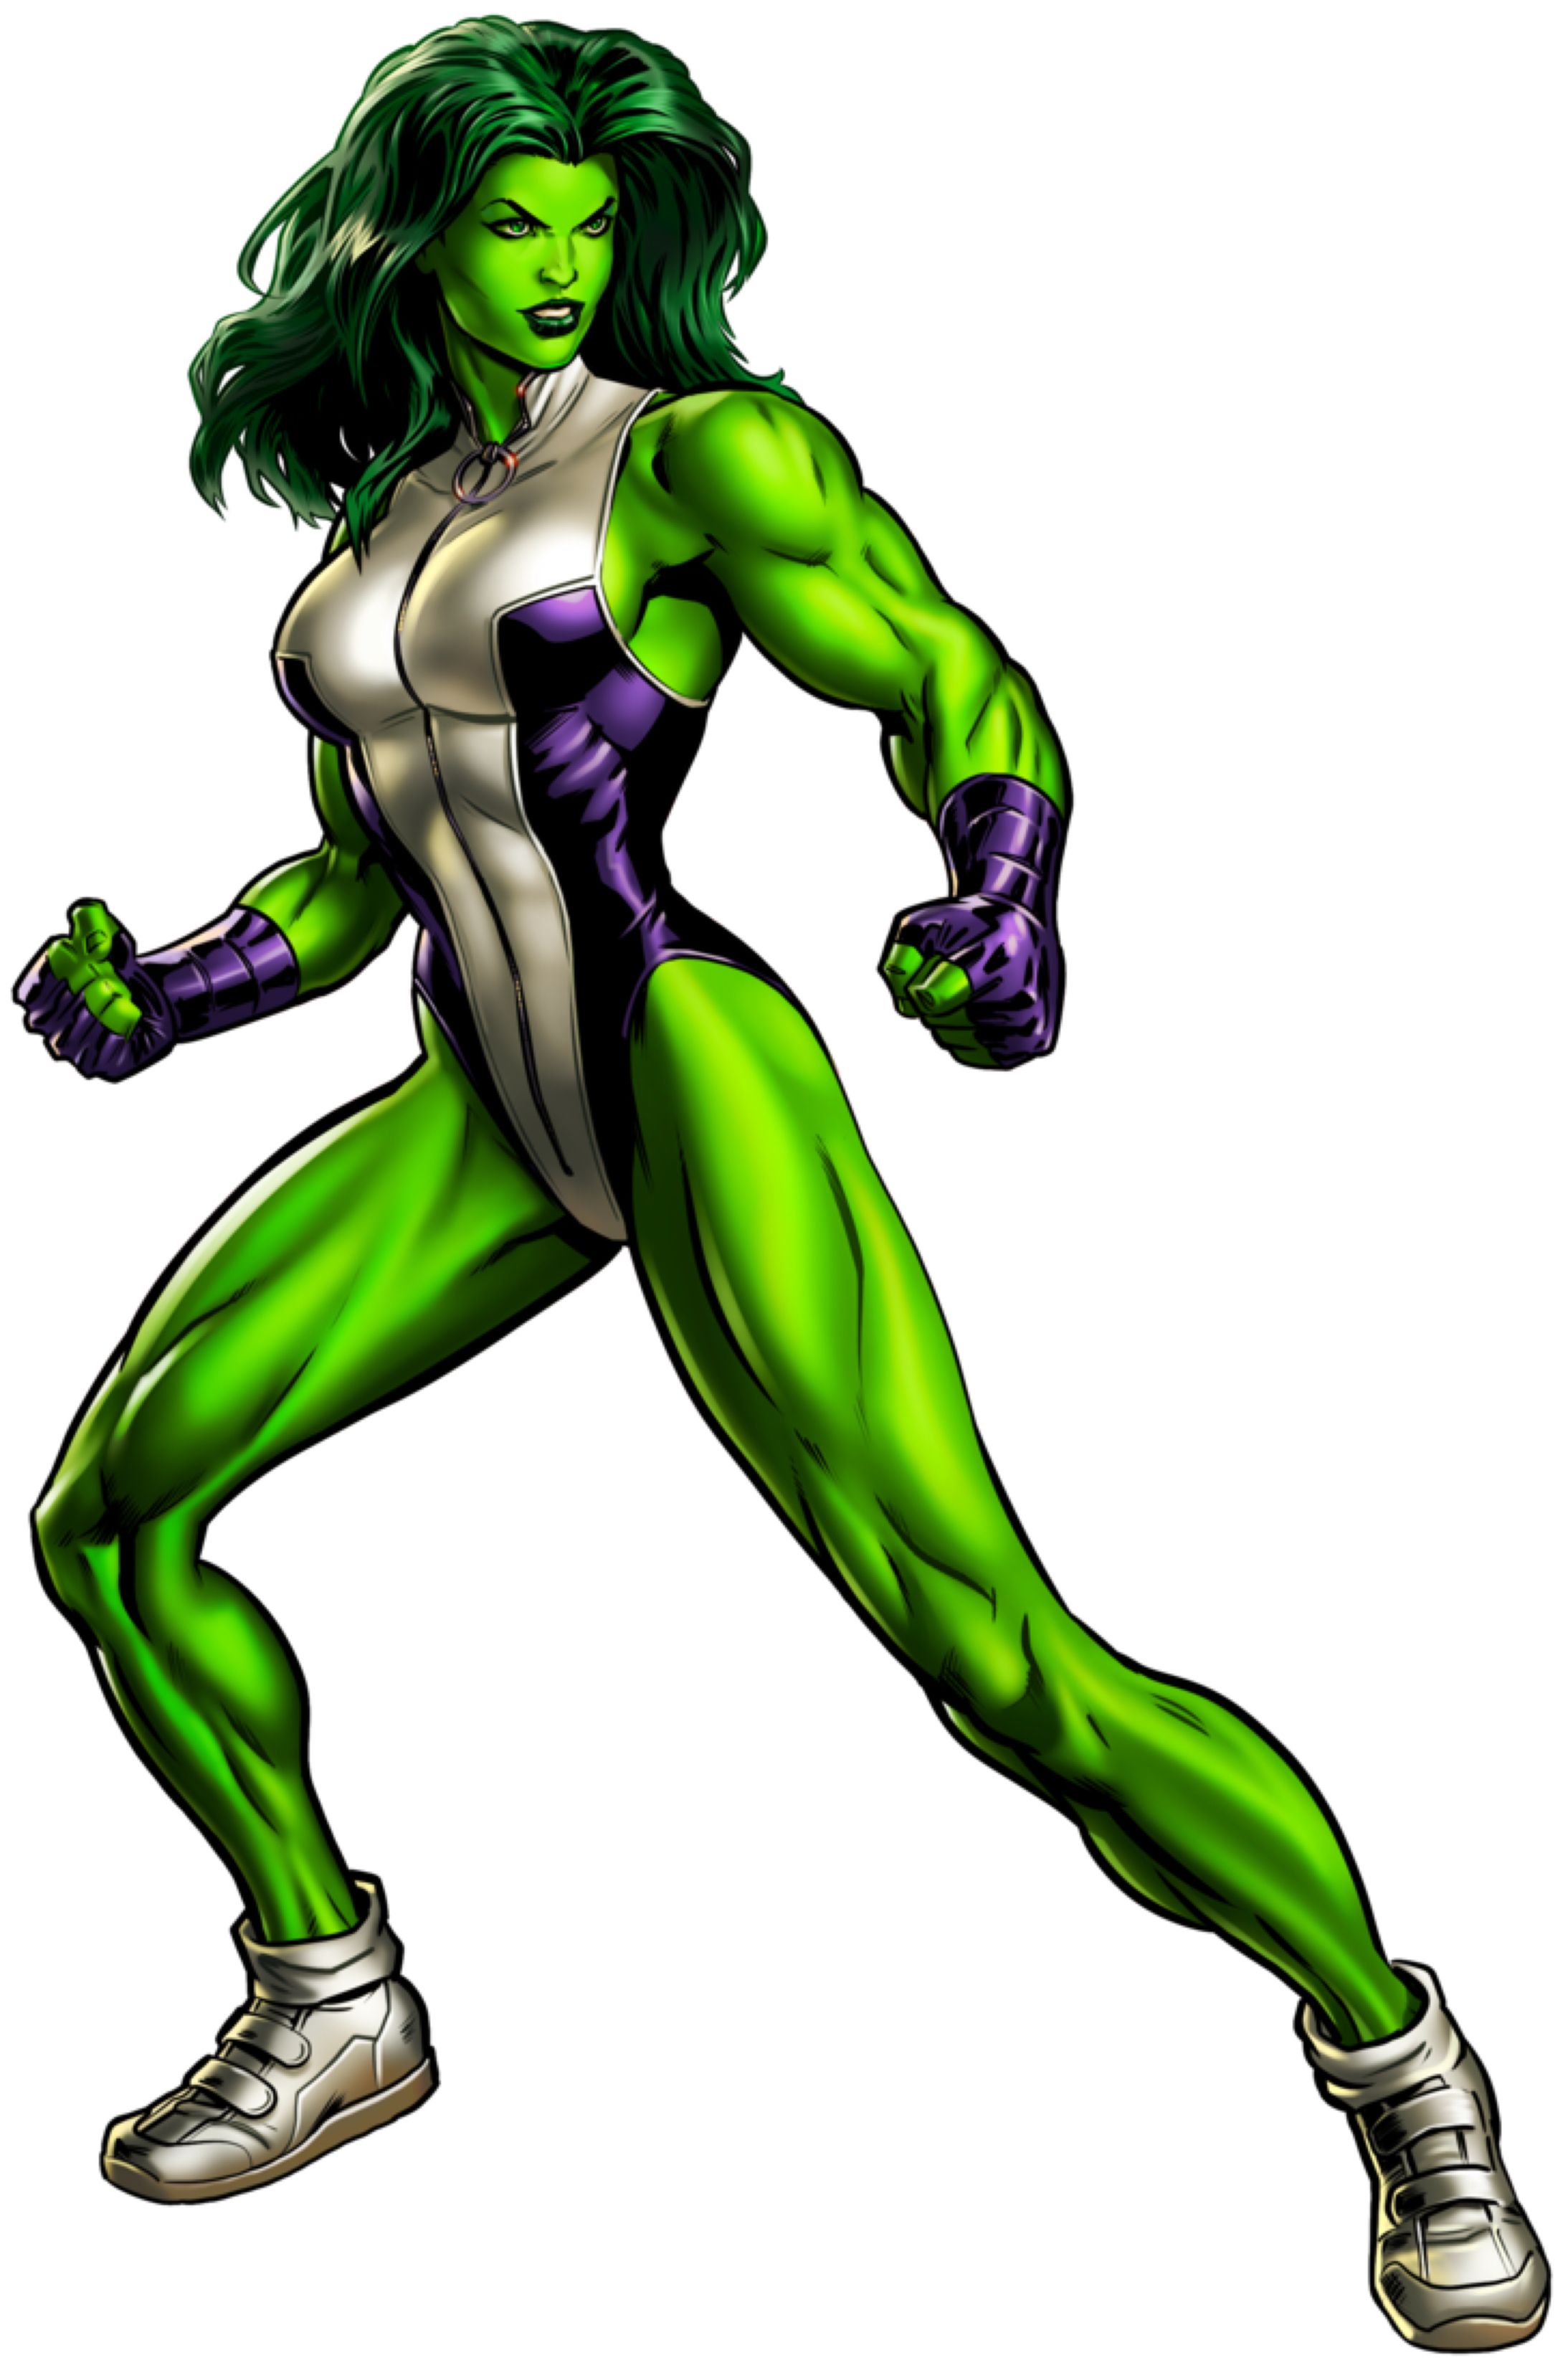 She-Hulk - Simple English Wikipedia, the free encyclopedia